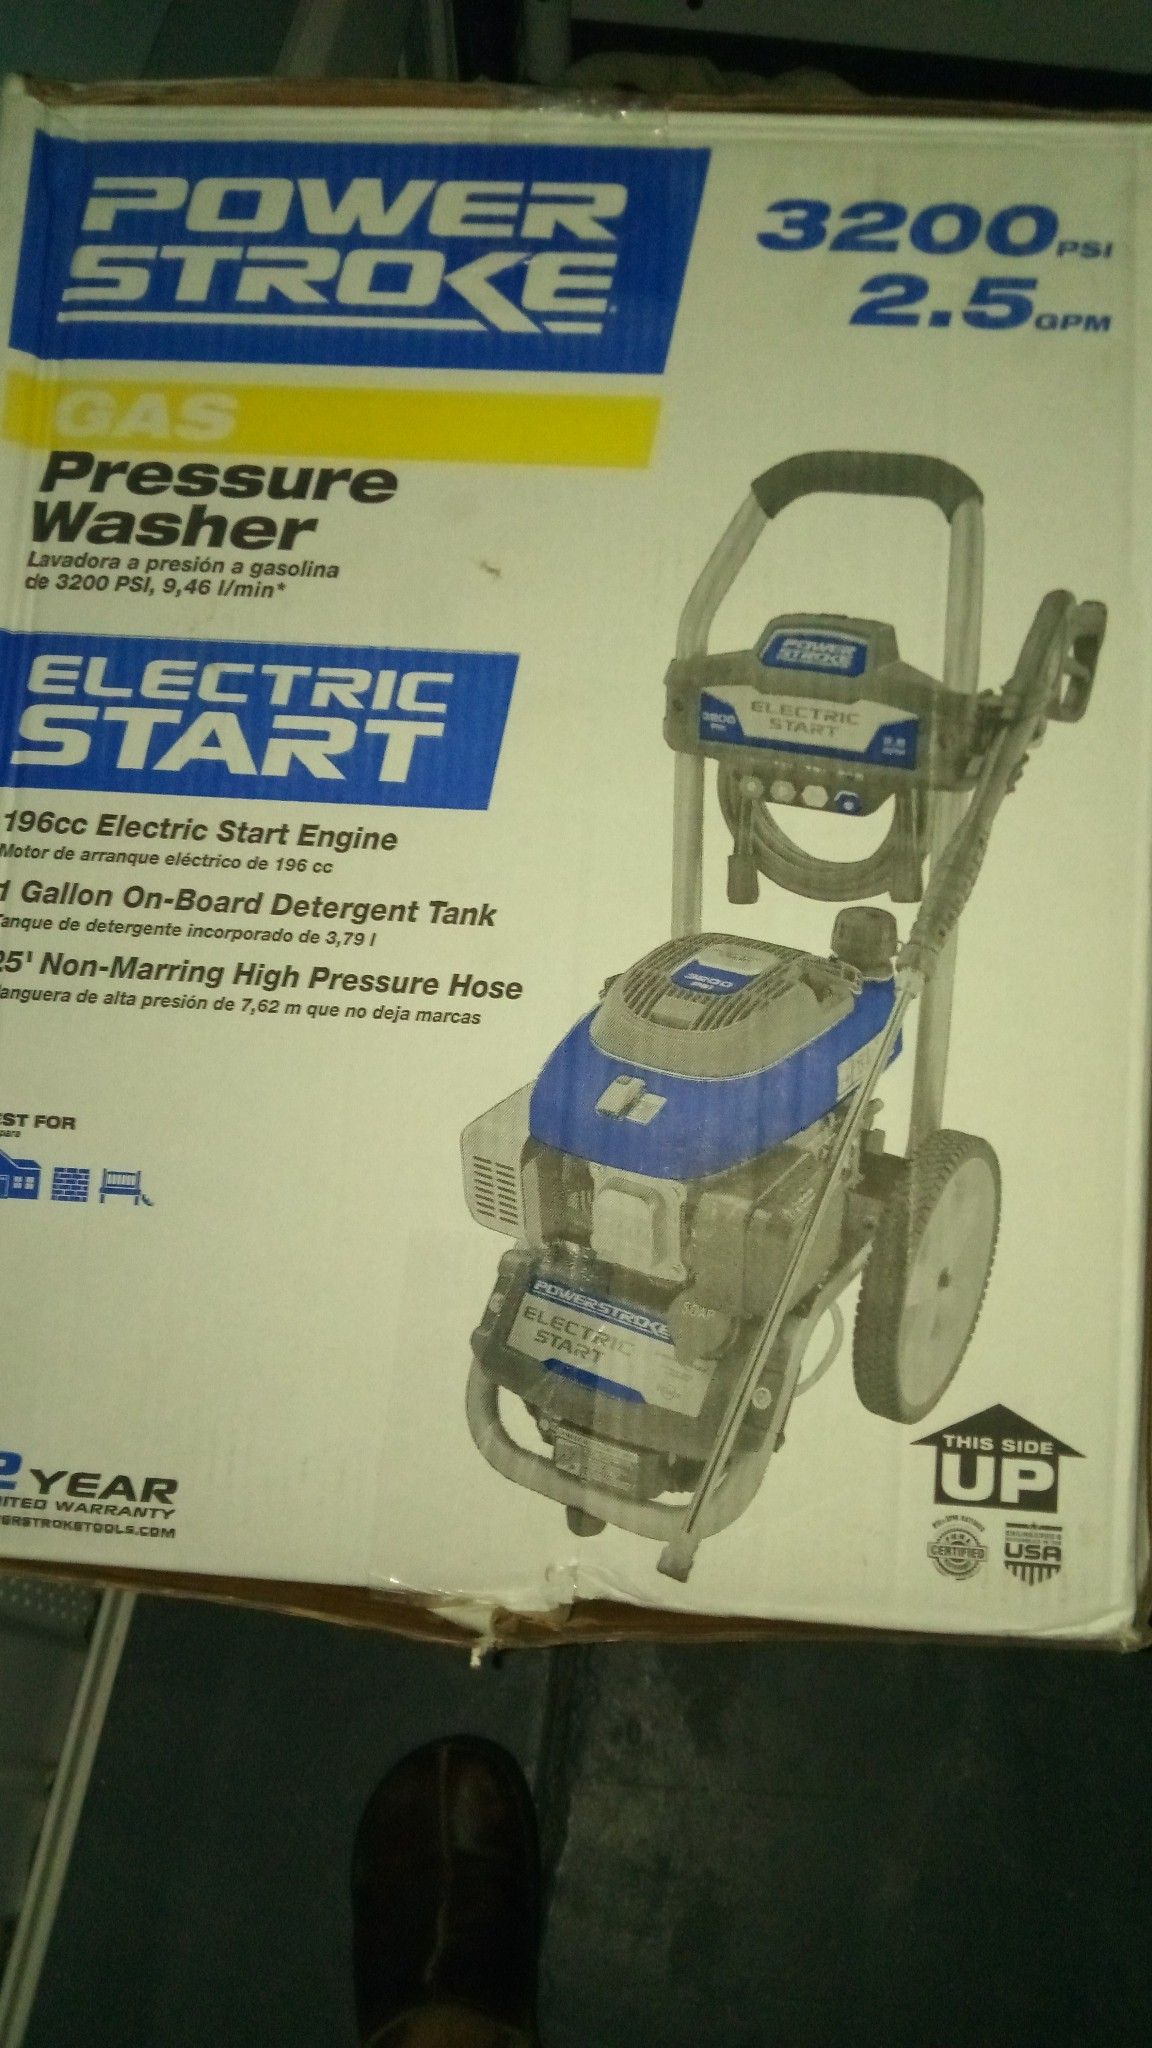 Power Stroke Pressure Washer brand new in box 3200 psi